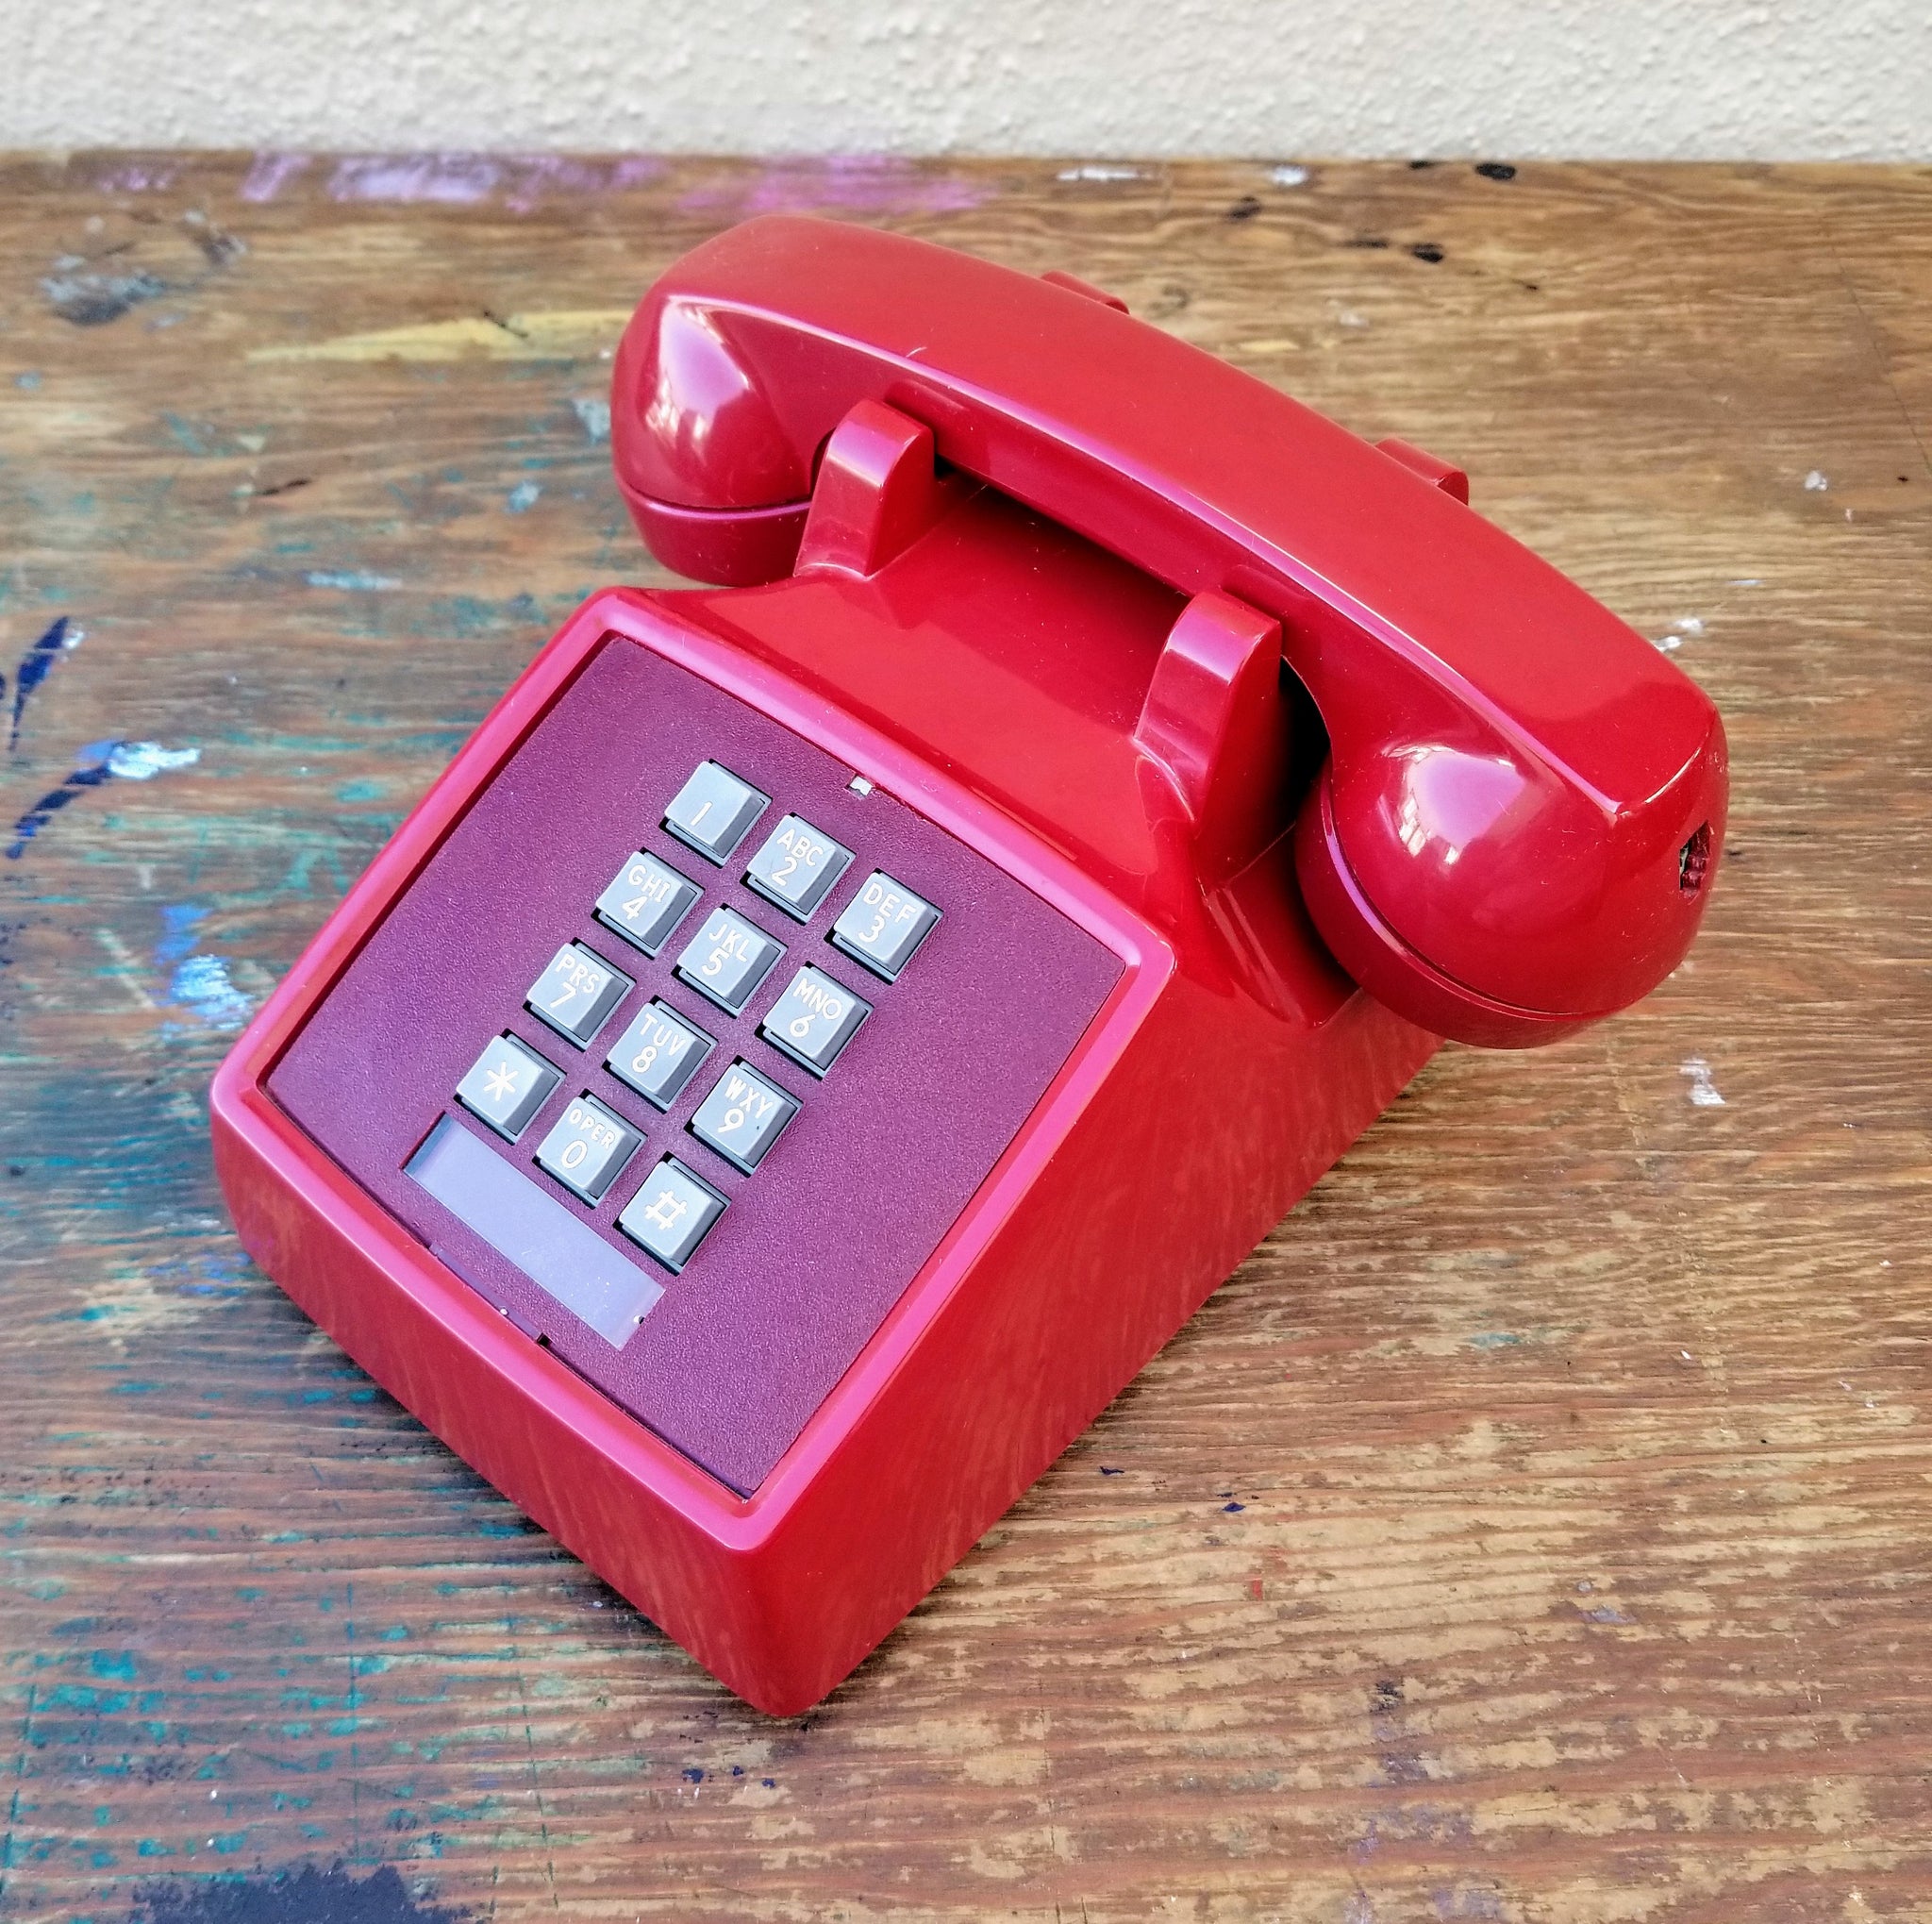 Vintage push button landline telephone